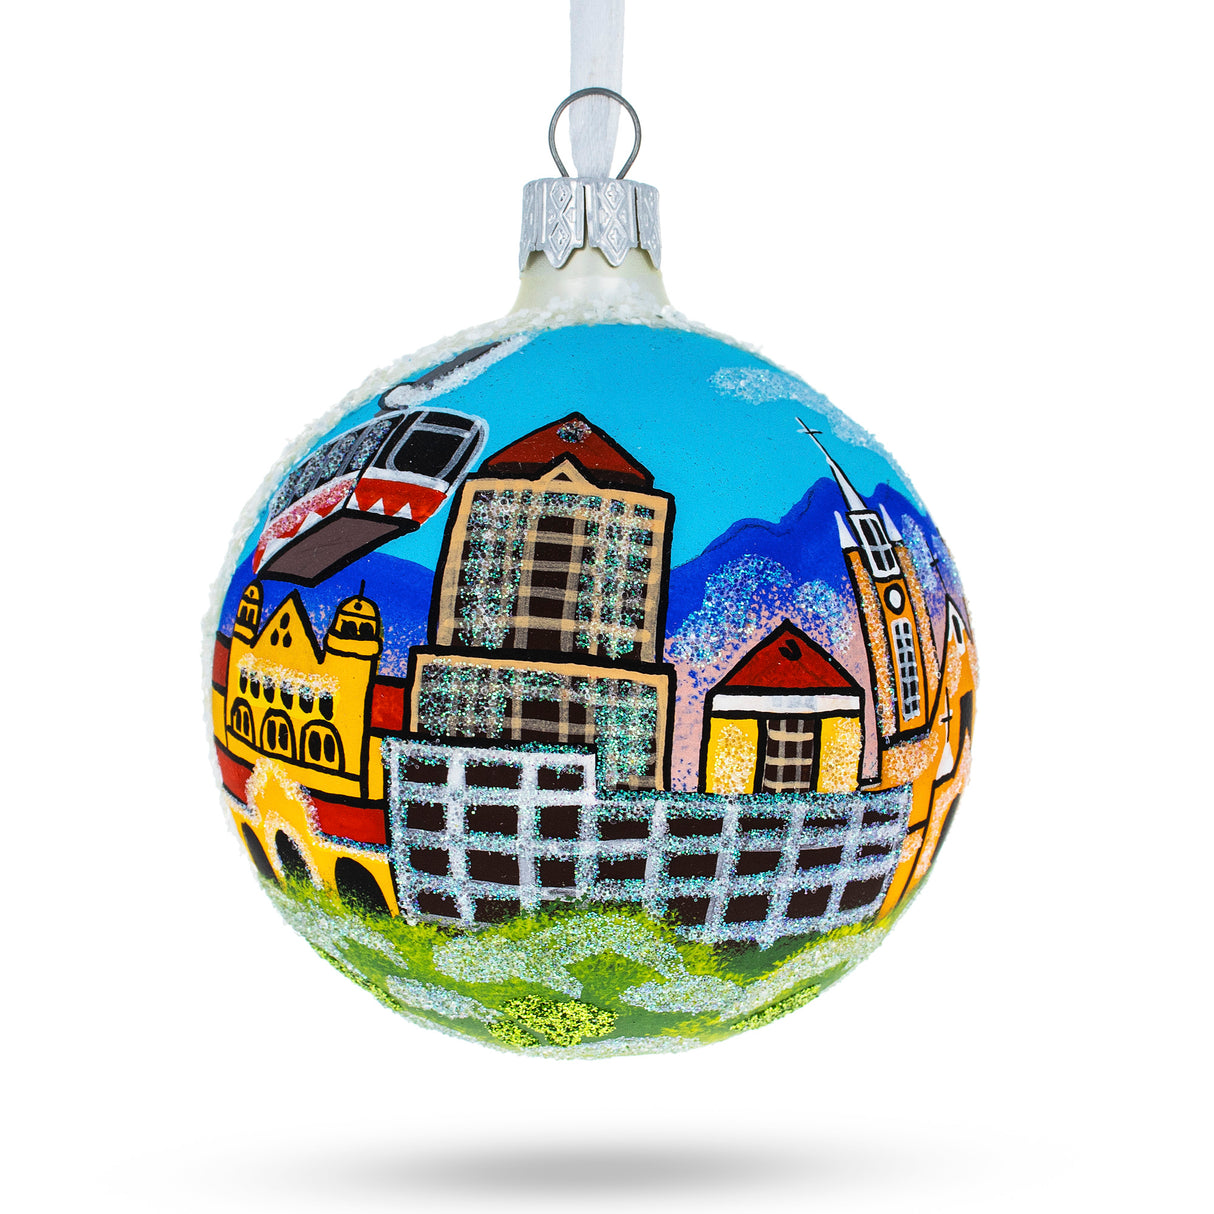 Albuquerque, New Mexico, USA Glass Christmas Ornament 3.25 Inches in Multi color, Round shape